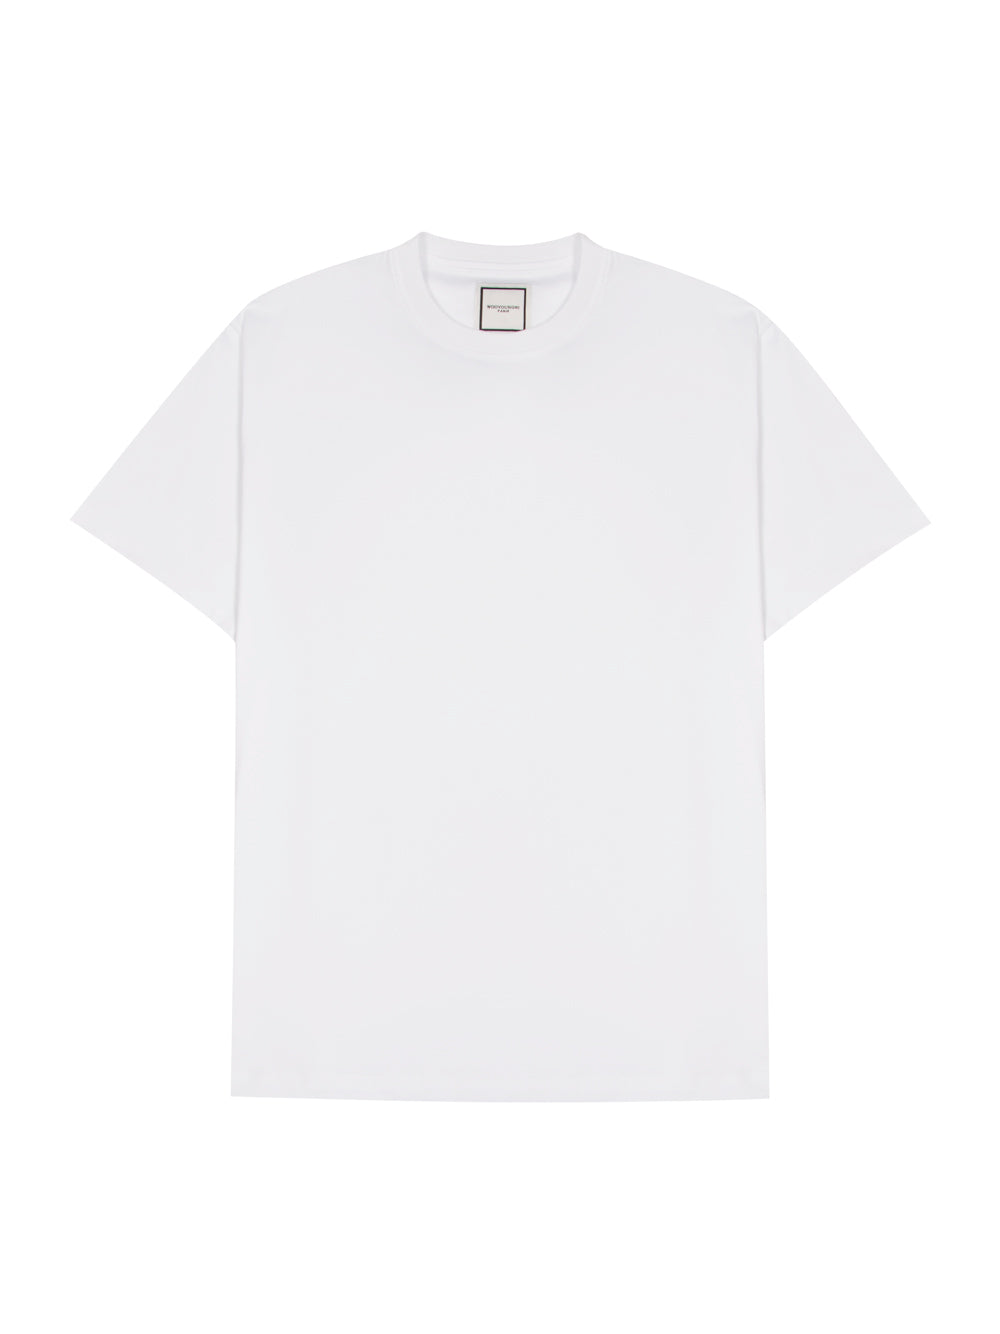 Metallic Embossed Back Logo T-Shirt (White)